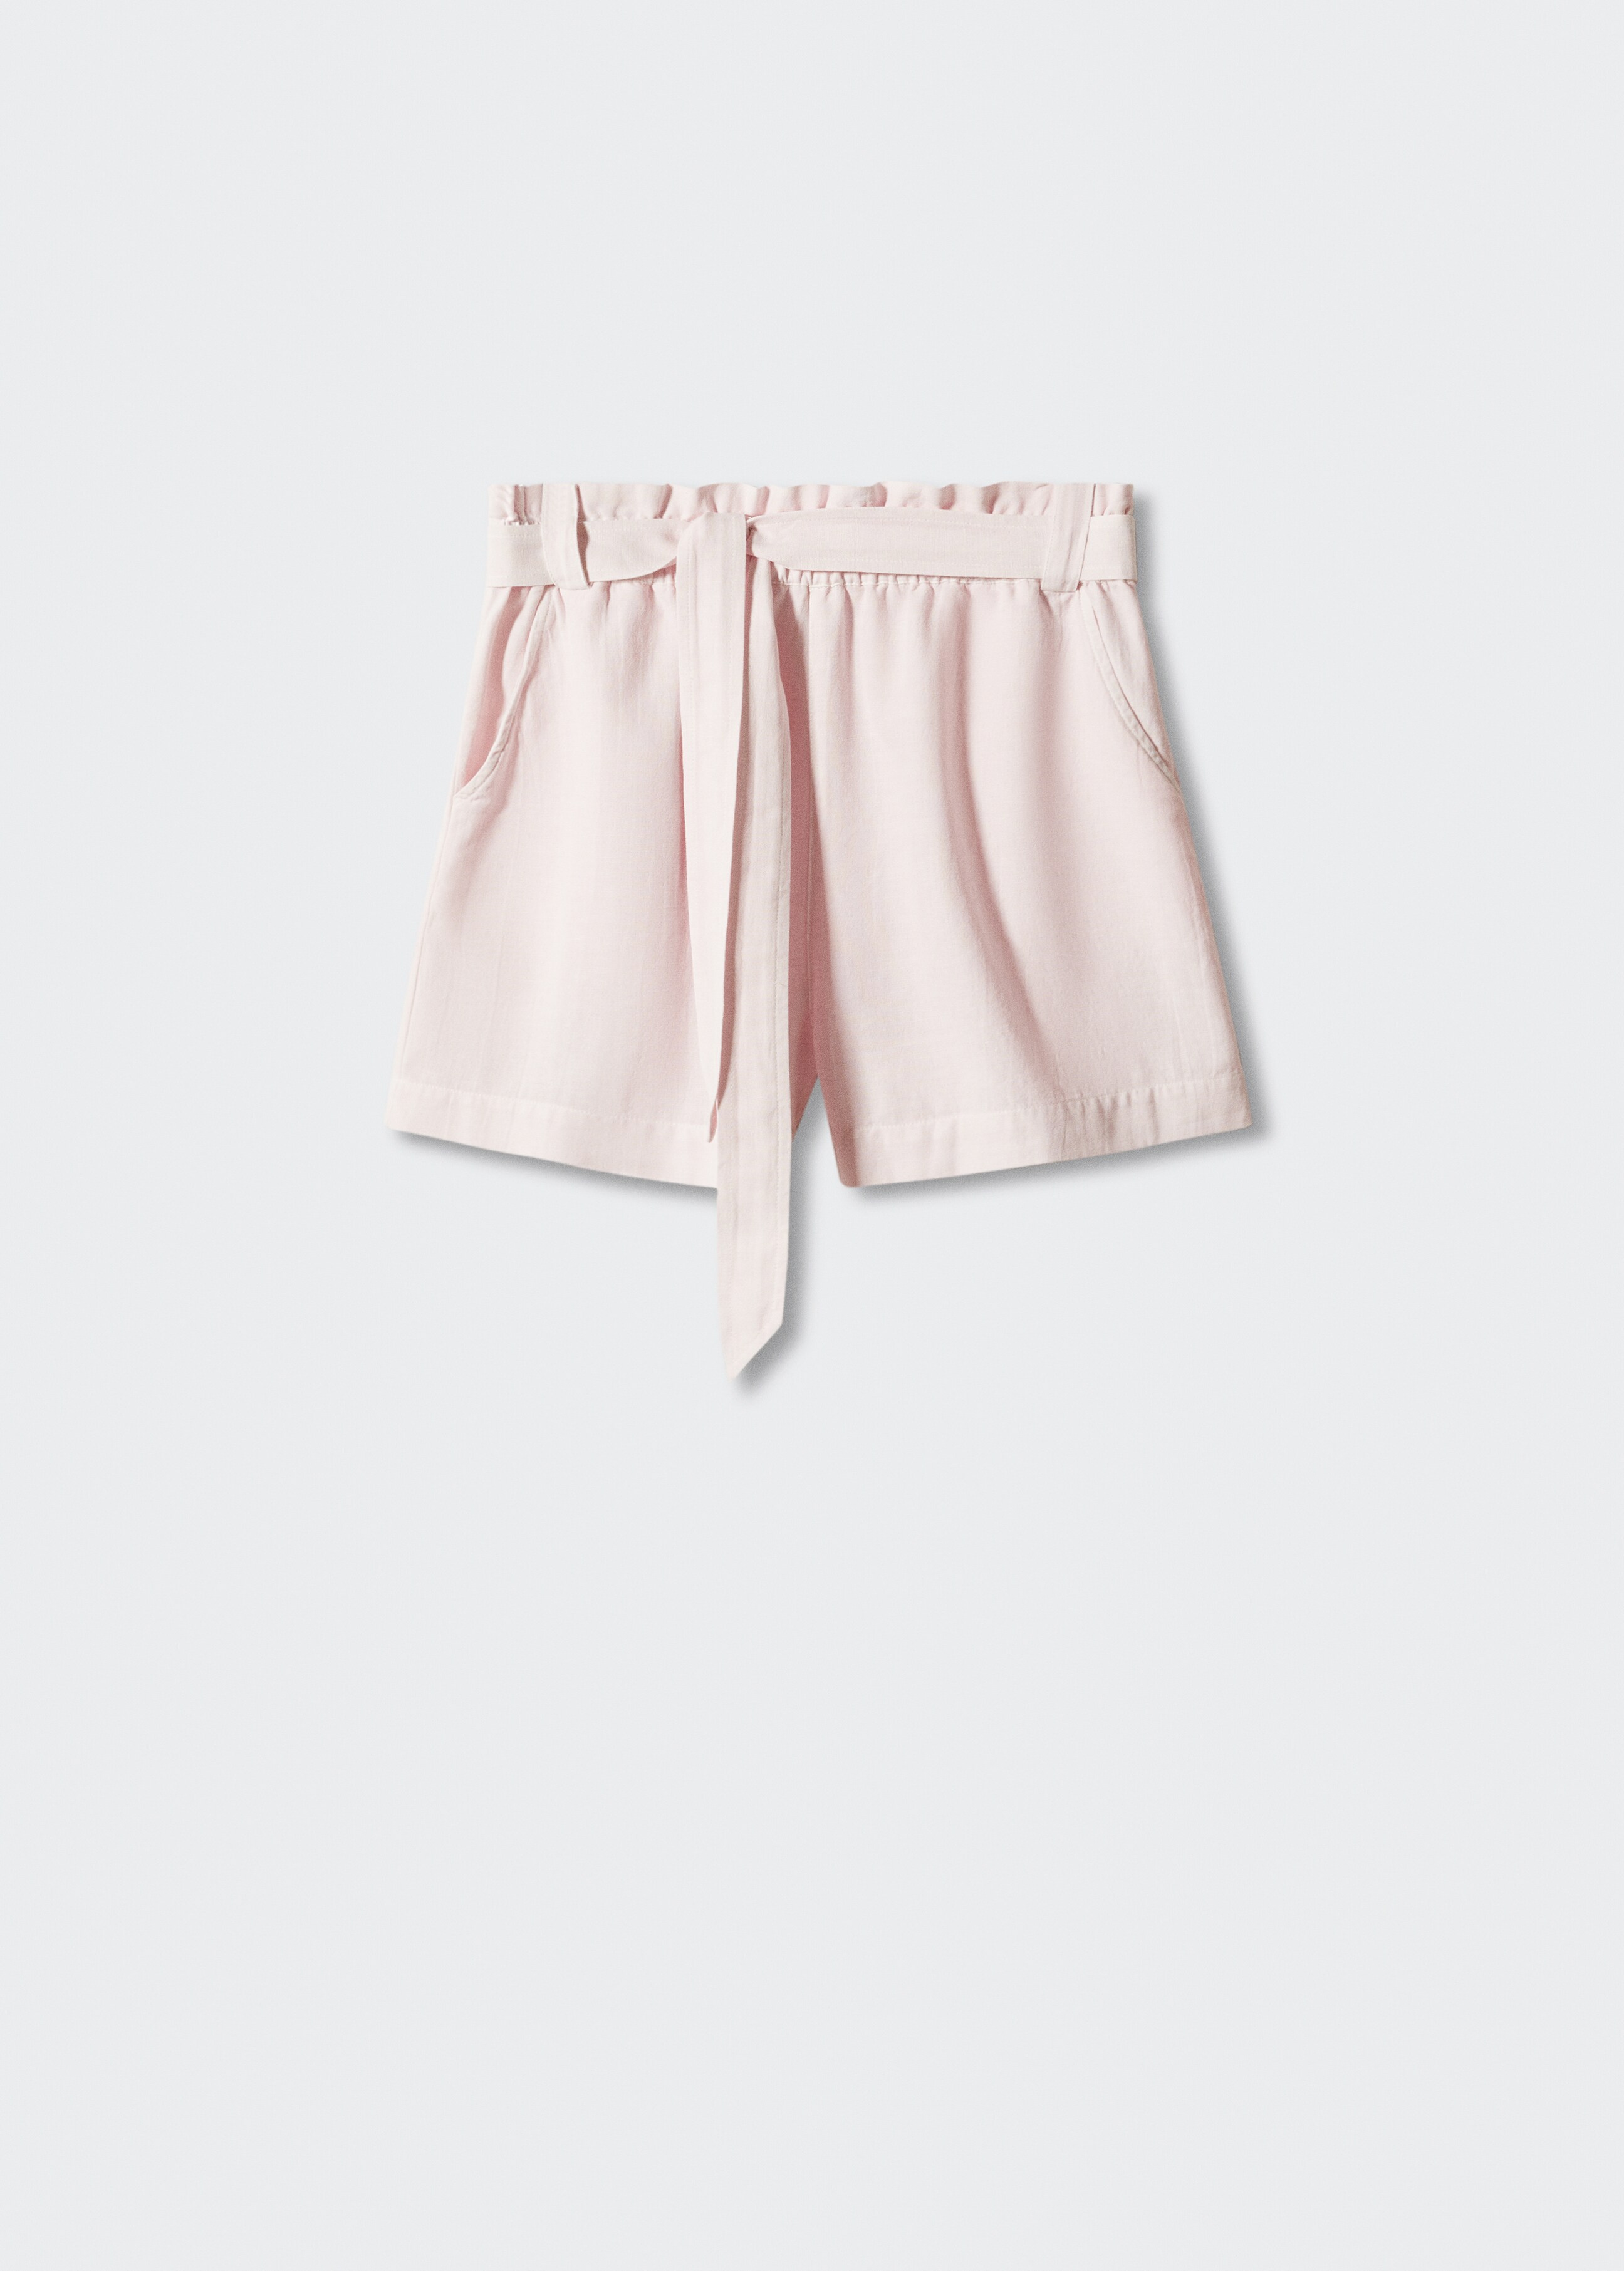 Cotton linen shorts - Article without model